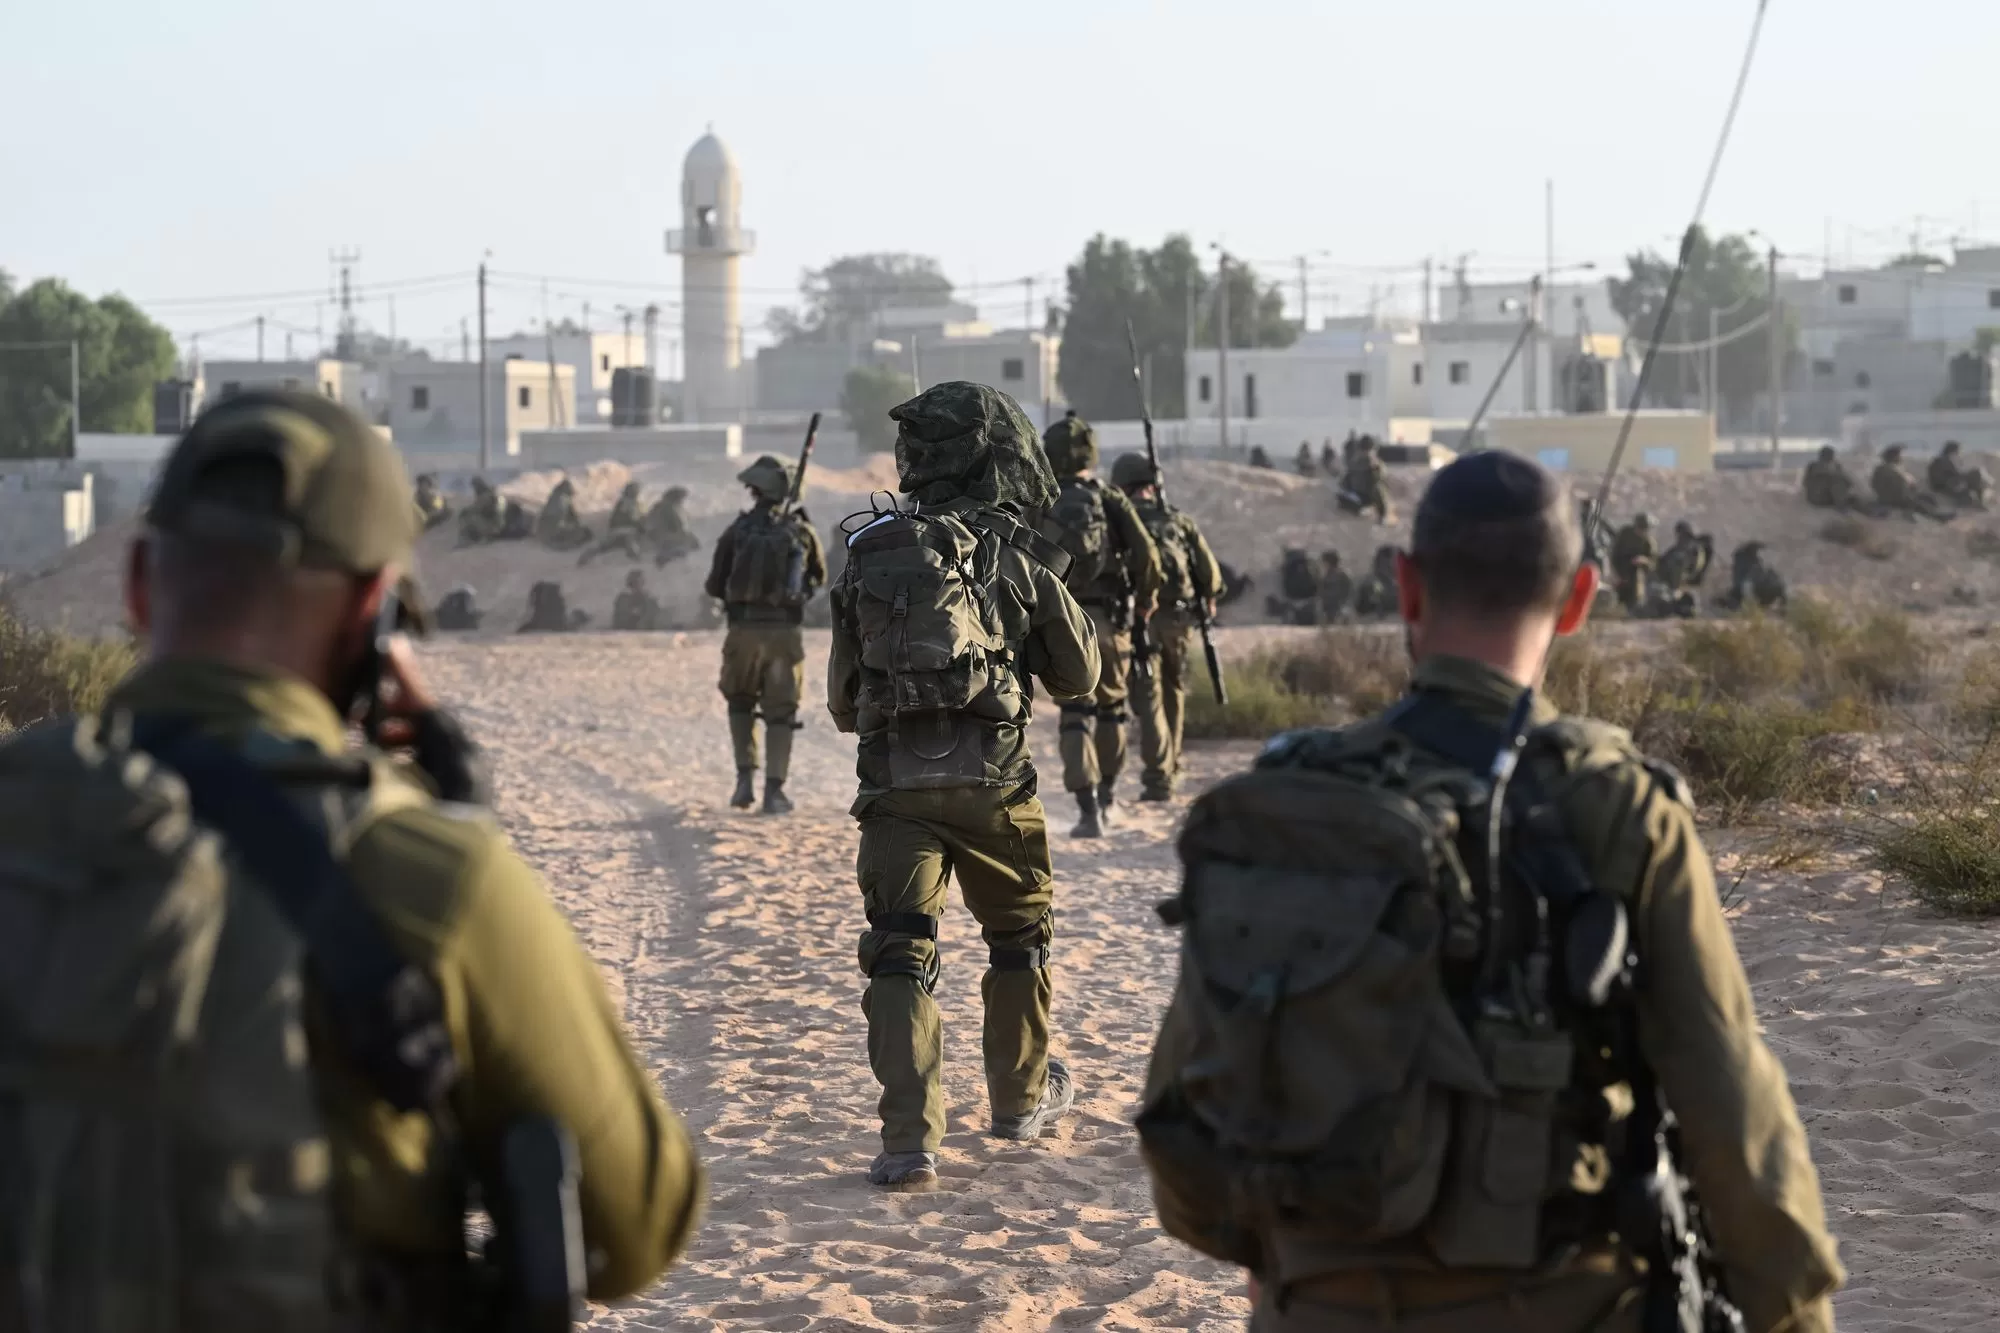 Pasukan Israel Ambil Alih Lahan Penduduk Palestina untuk Hubungkan Kota Izdbar dan Nokdim